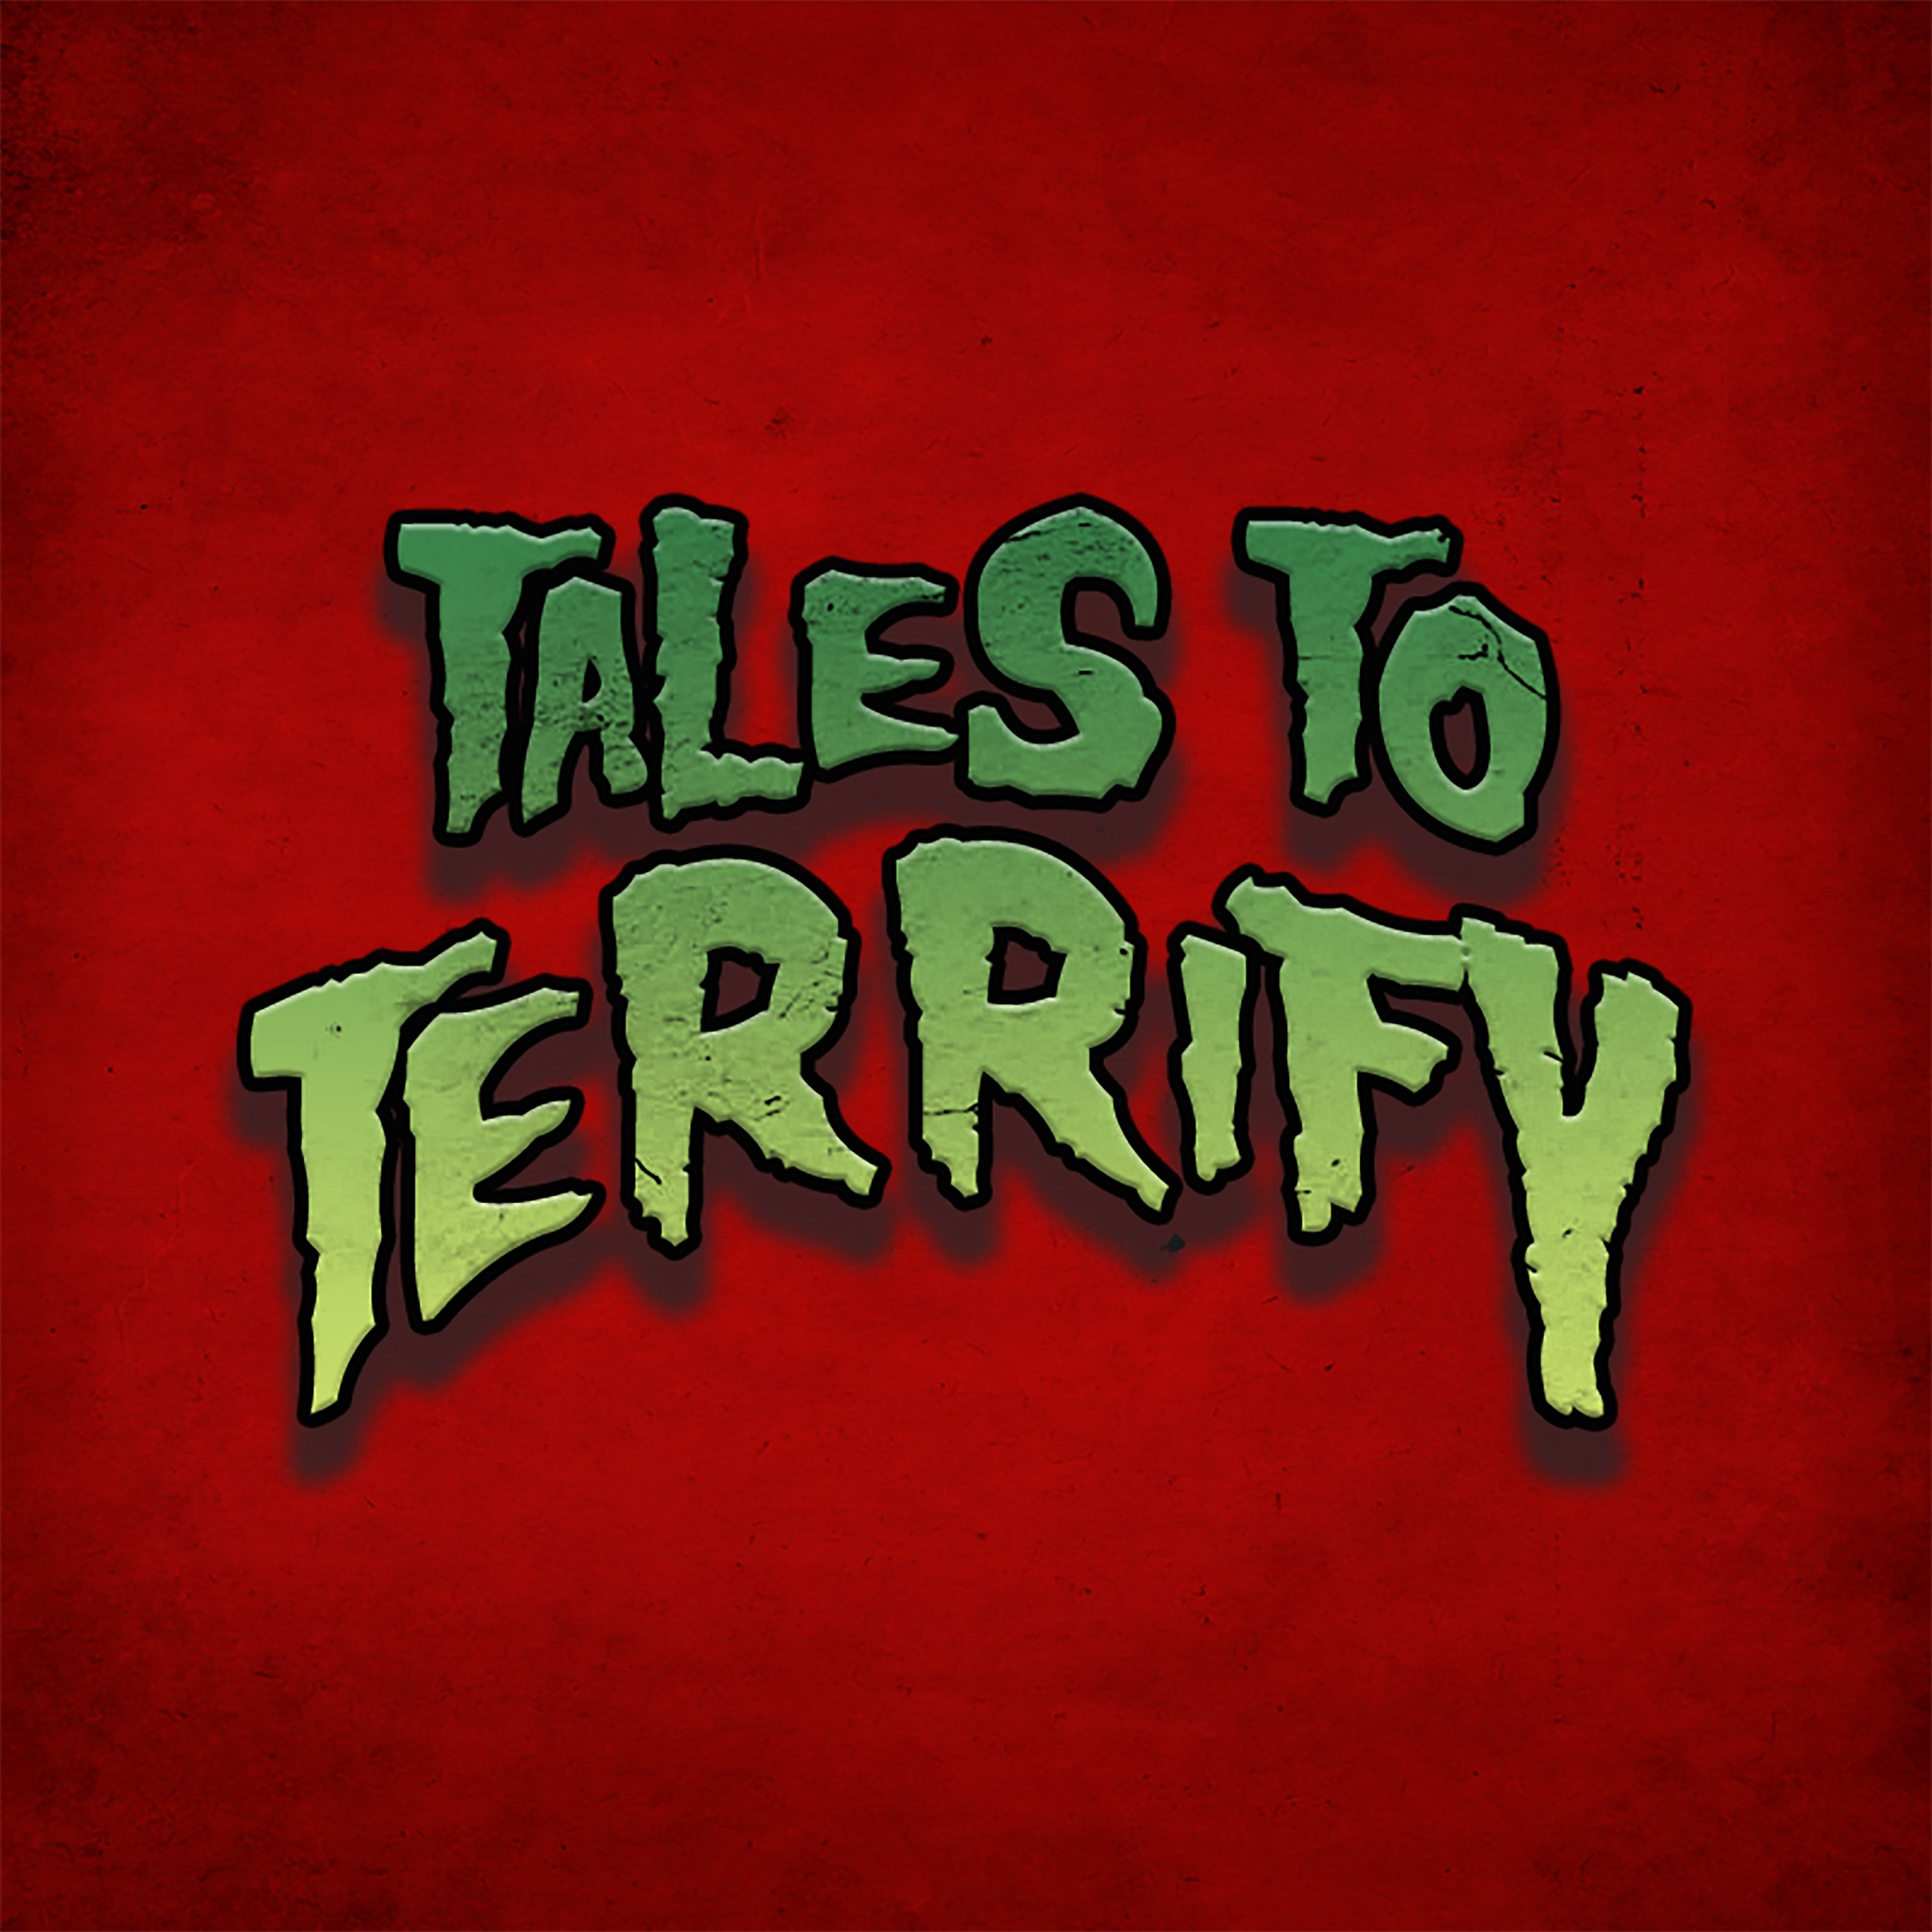 Tales to Terrify 445 John Dodds